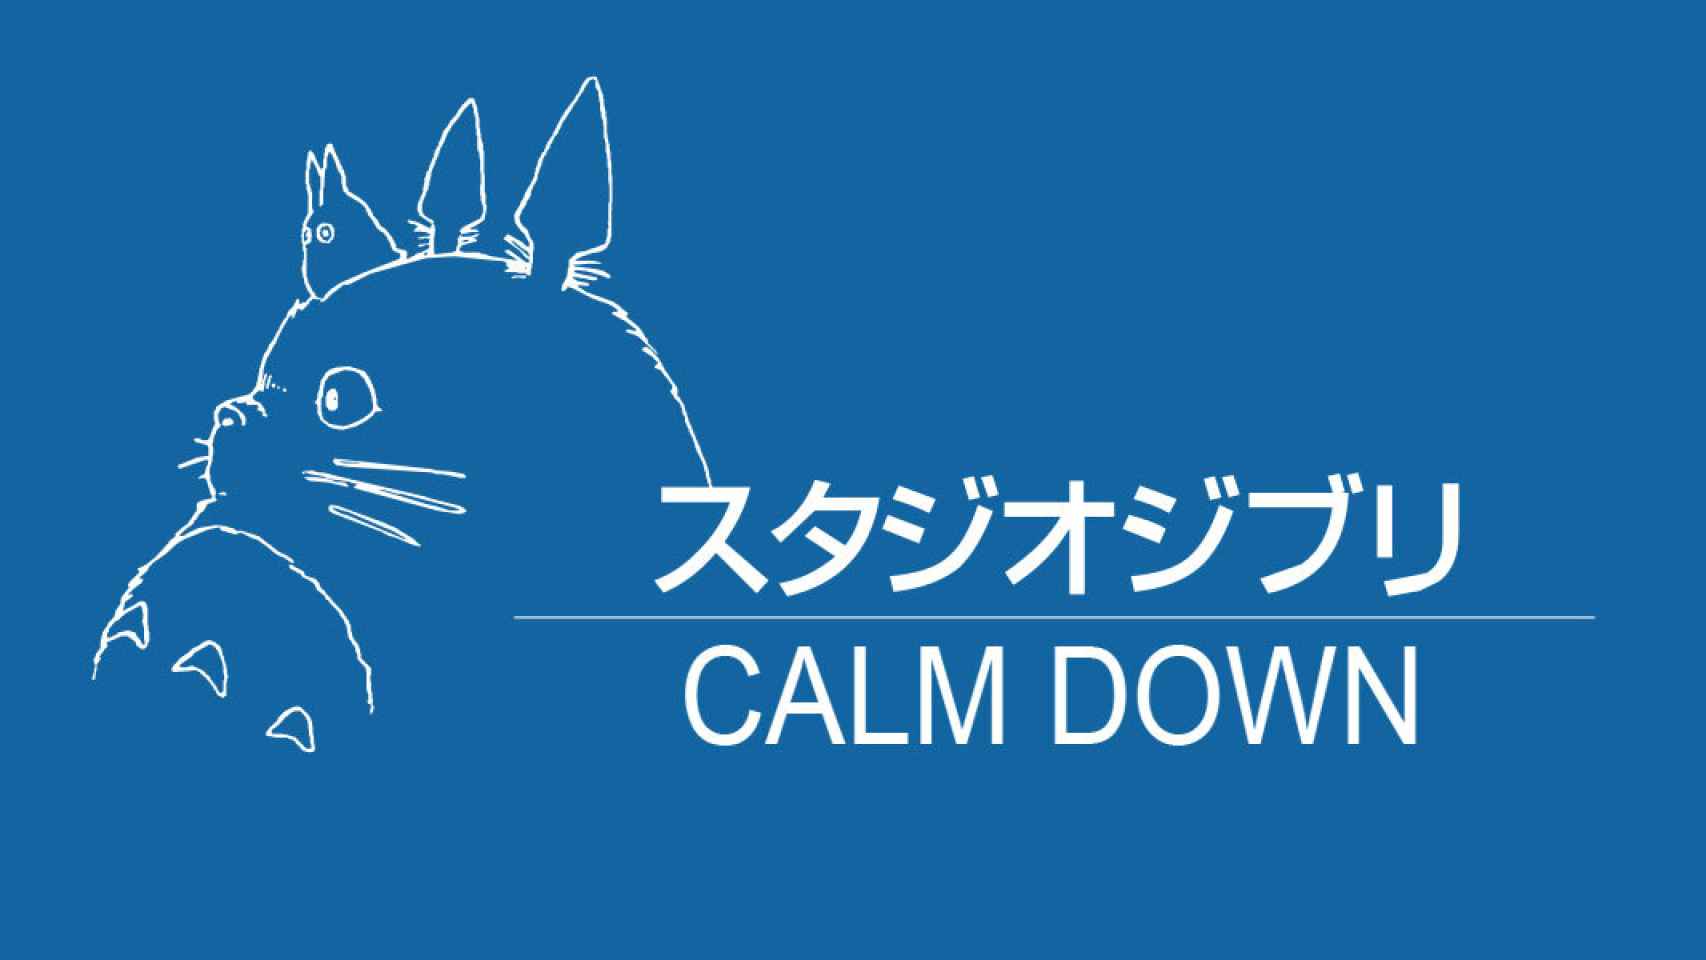 Studio Ghibli Calm Down